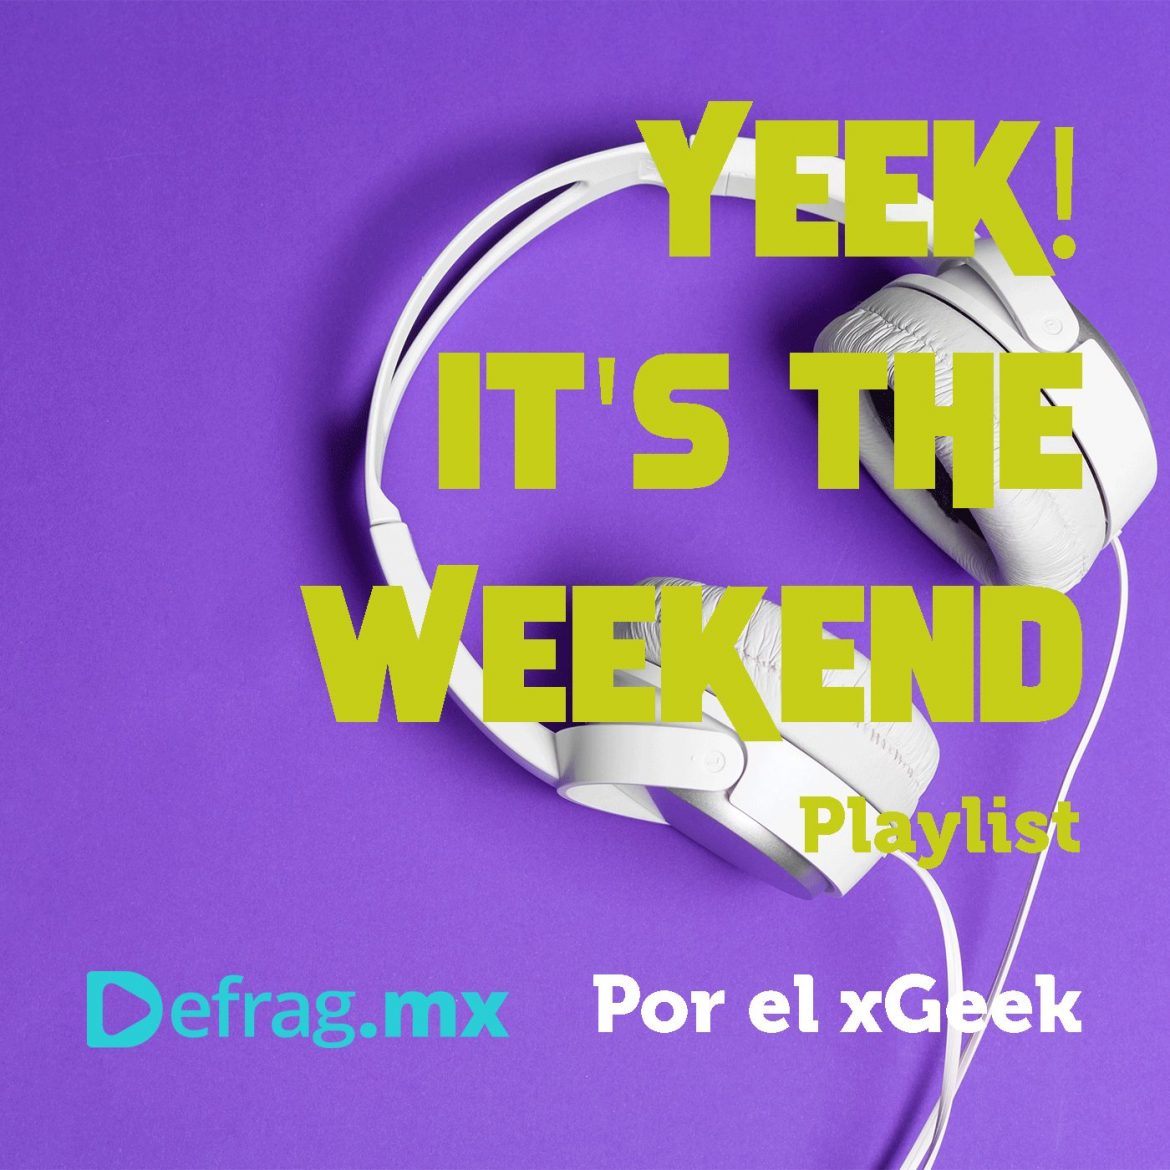 Defrag.mx Yeek! It's The Weekend Playlist Ago 05 2022